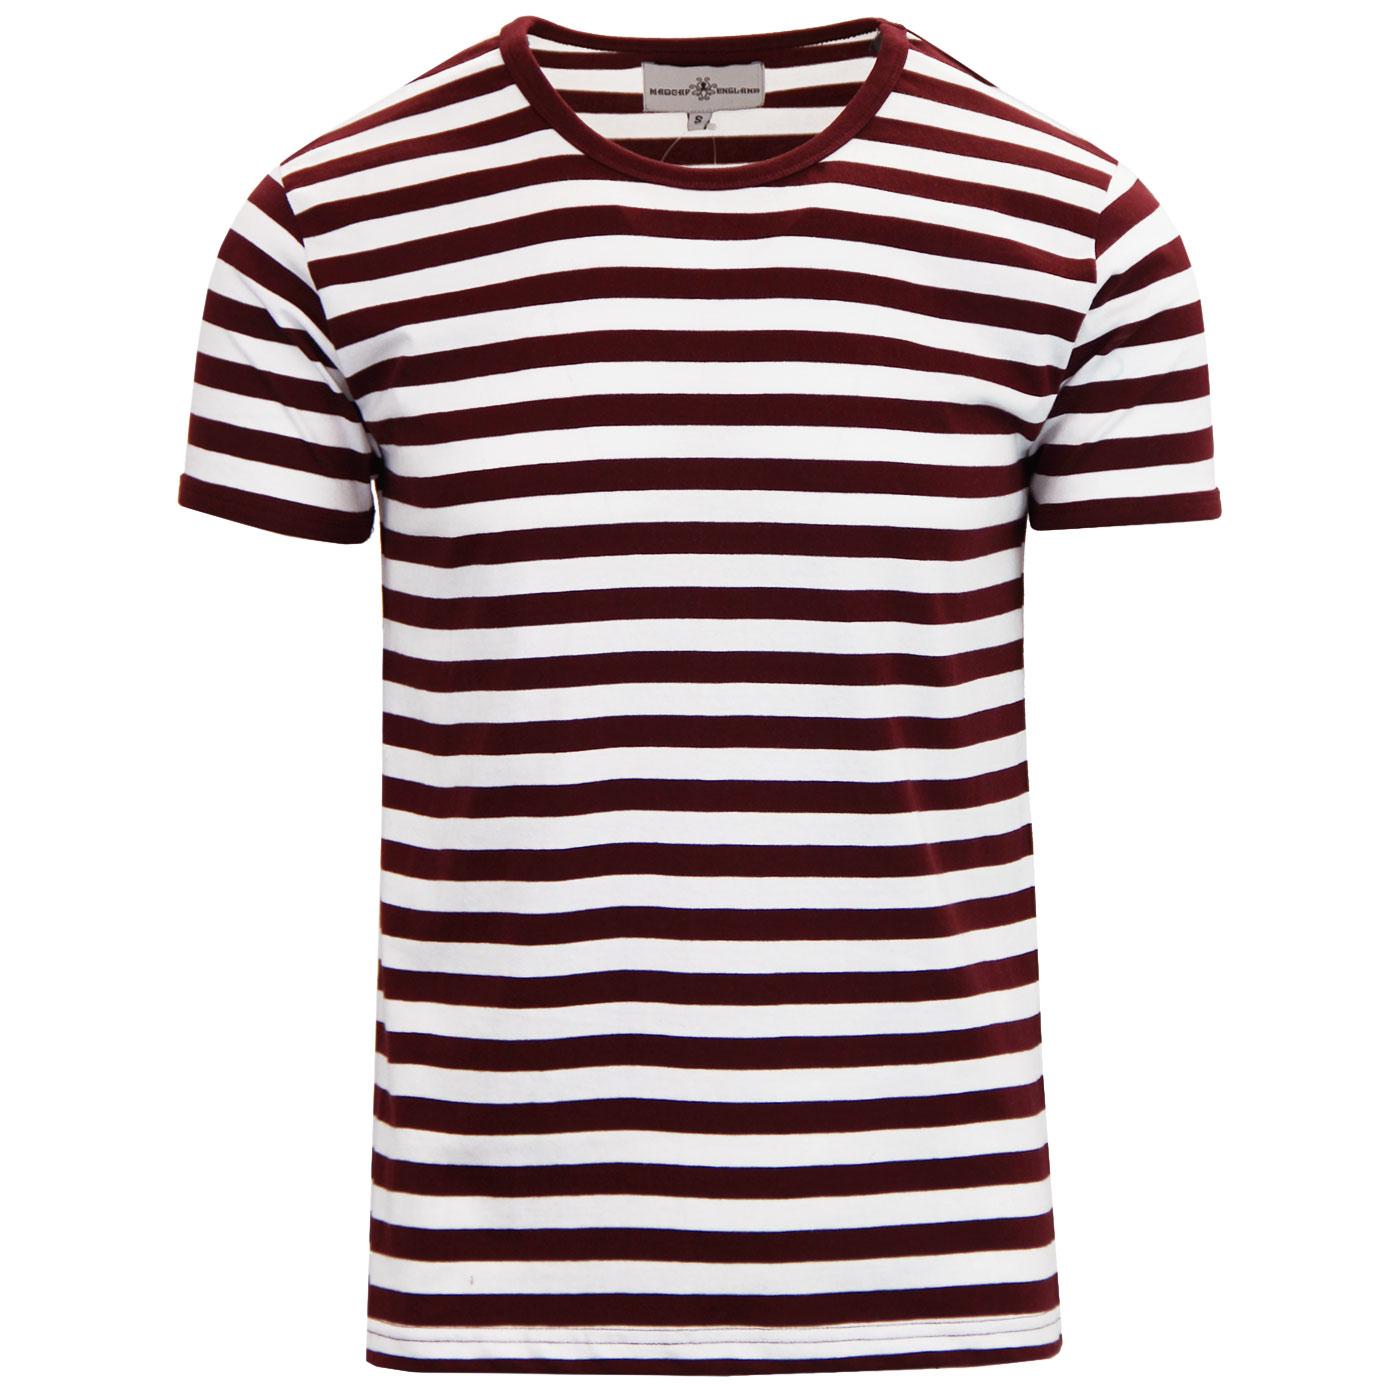 Madcap England Retrorocket Men's Retro 1960s Mod Short Sleeve Stripe T-shirt in Zinfandel and White